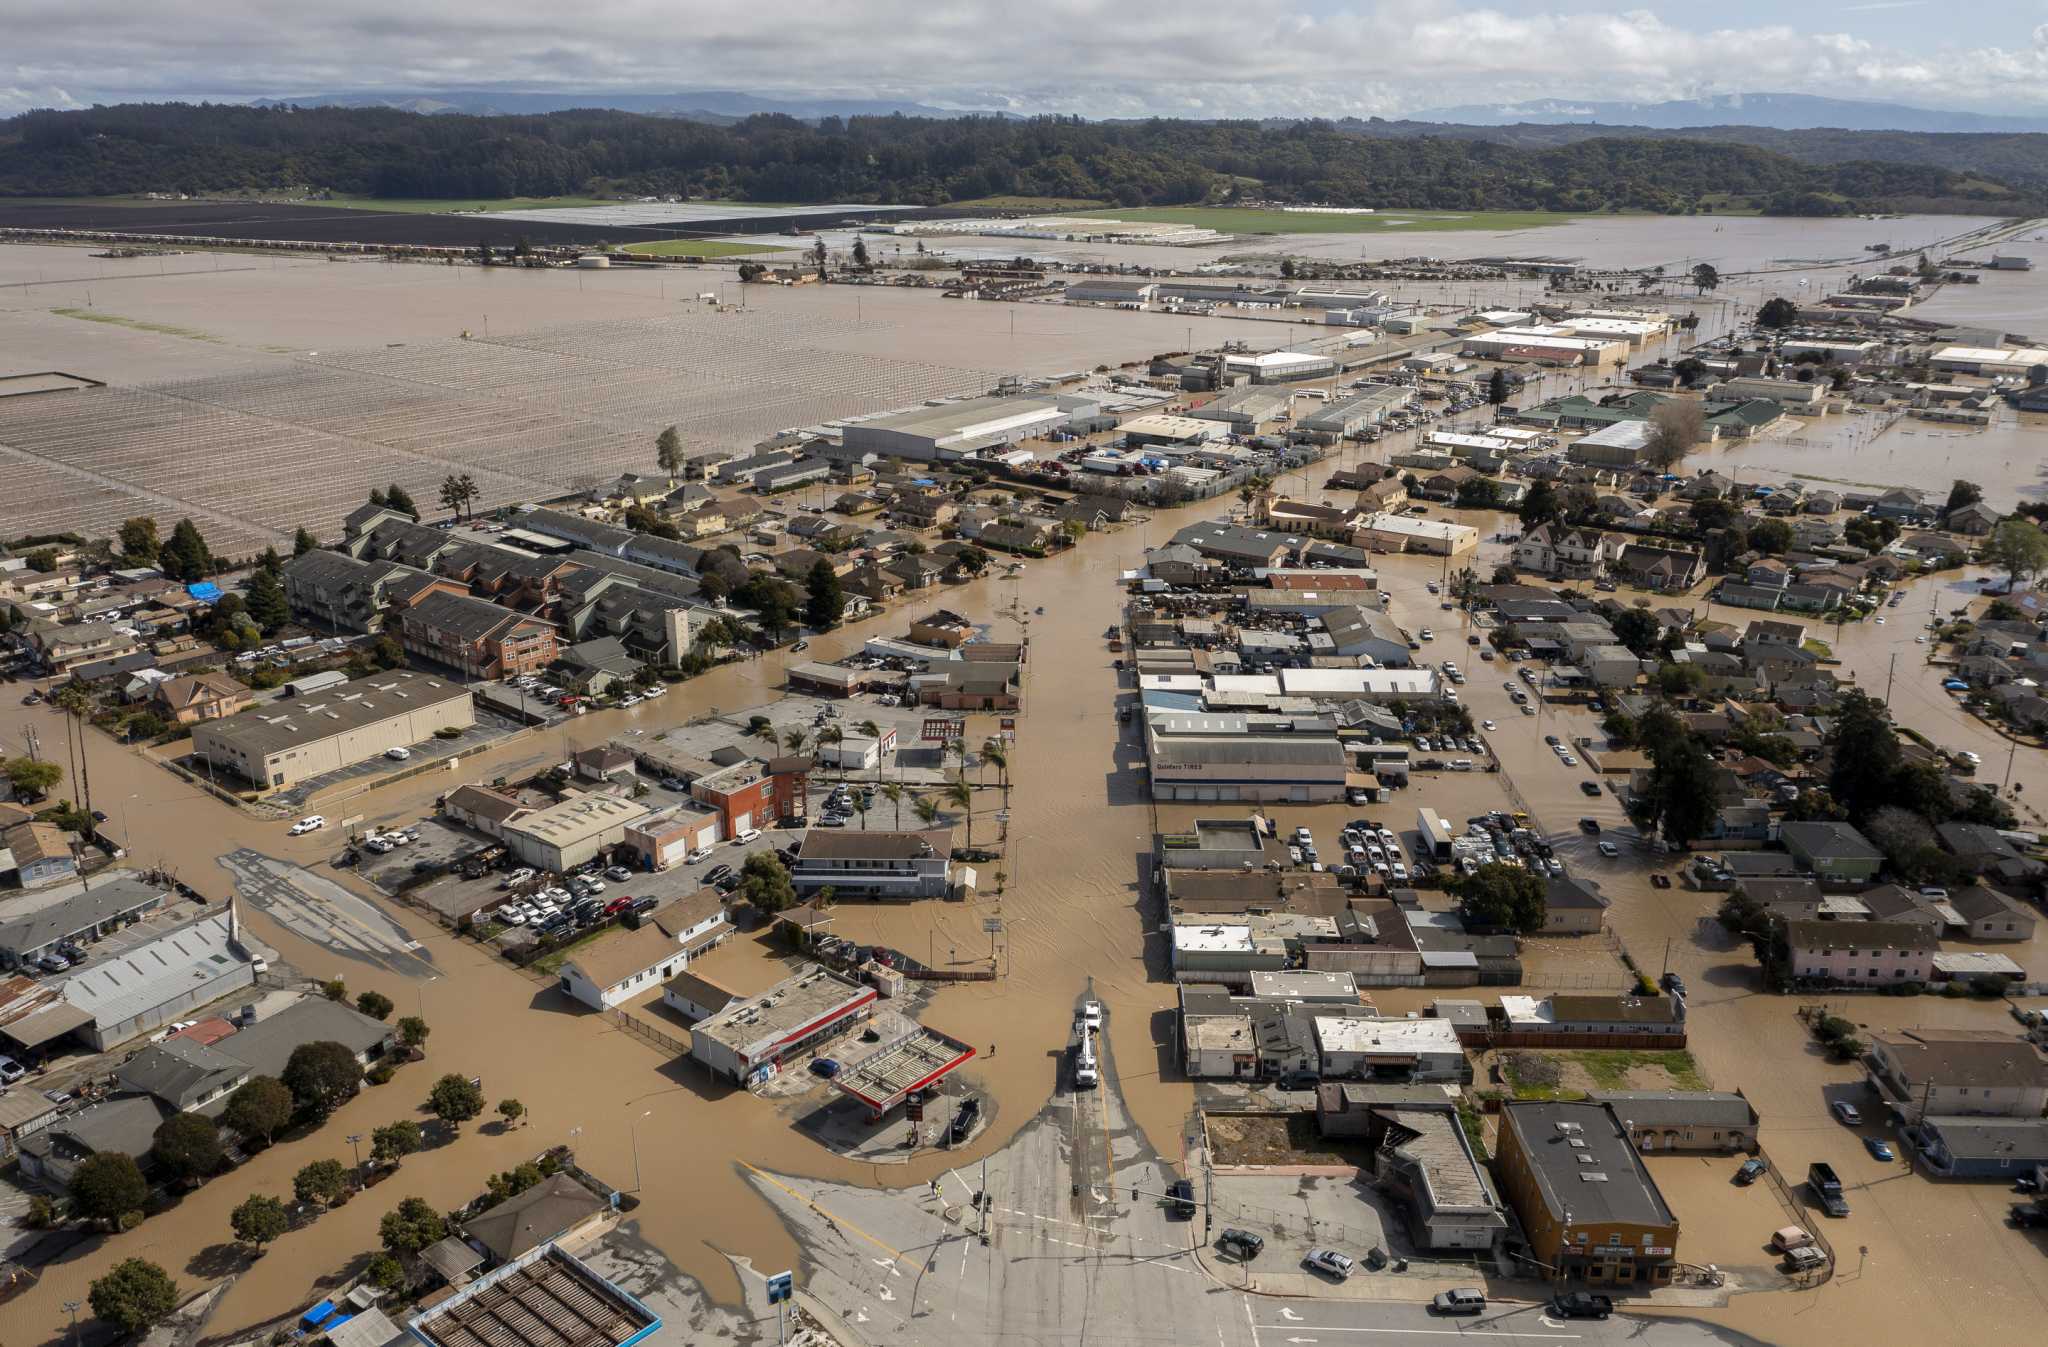 See drone video of Pajaro flowing through levee, devastating flooding